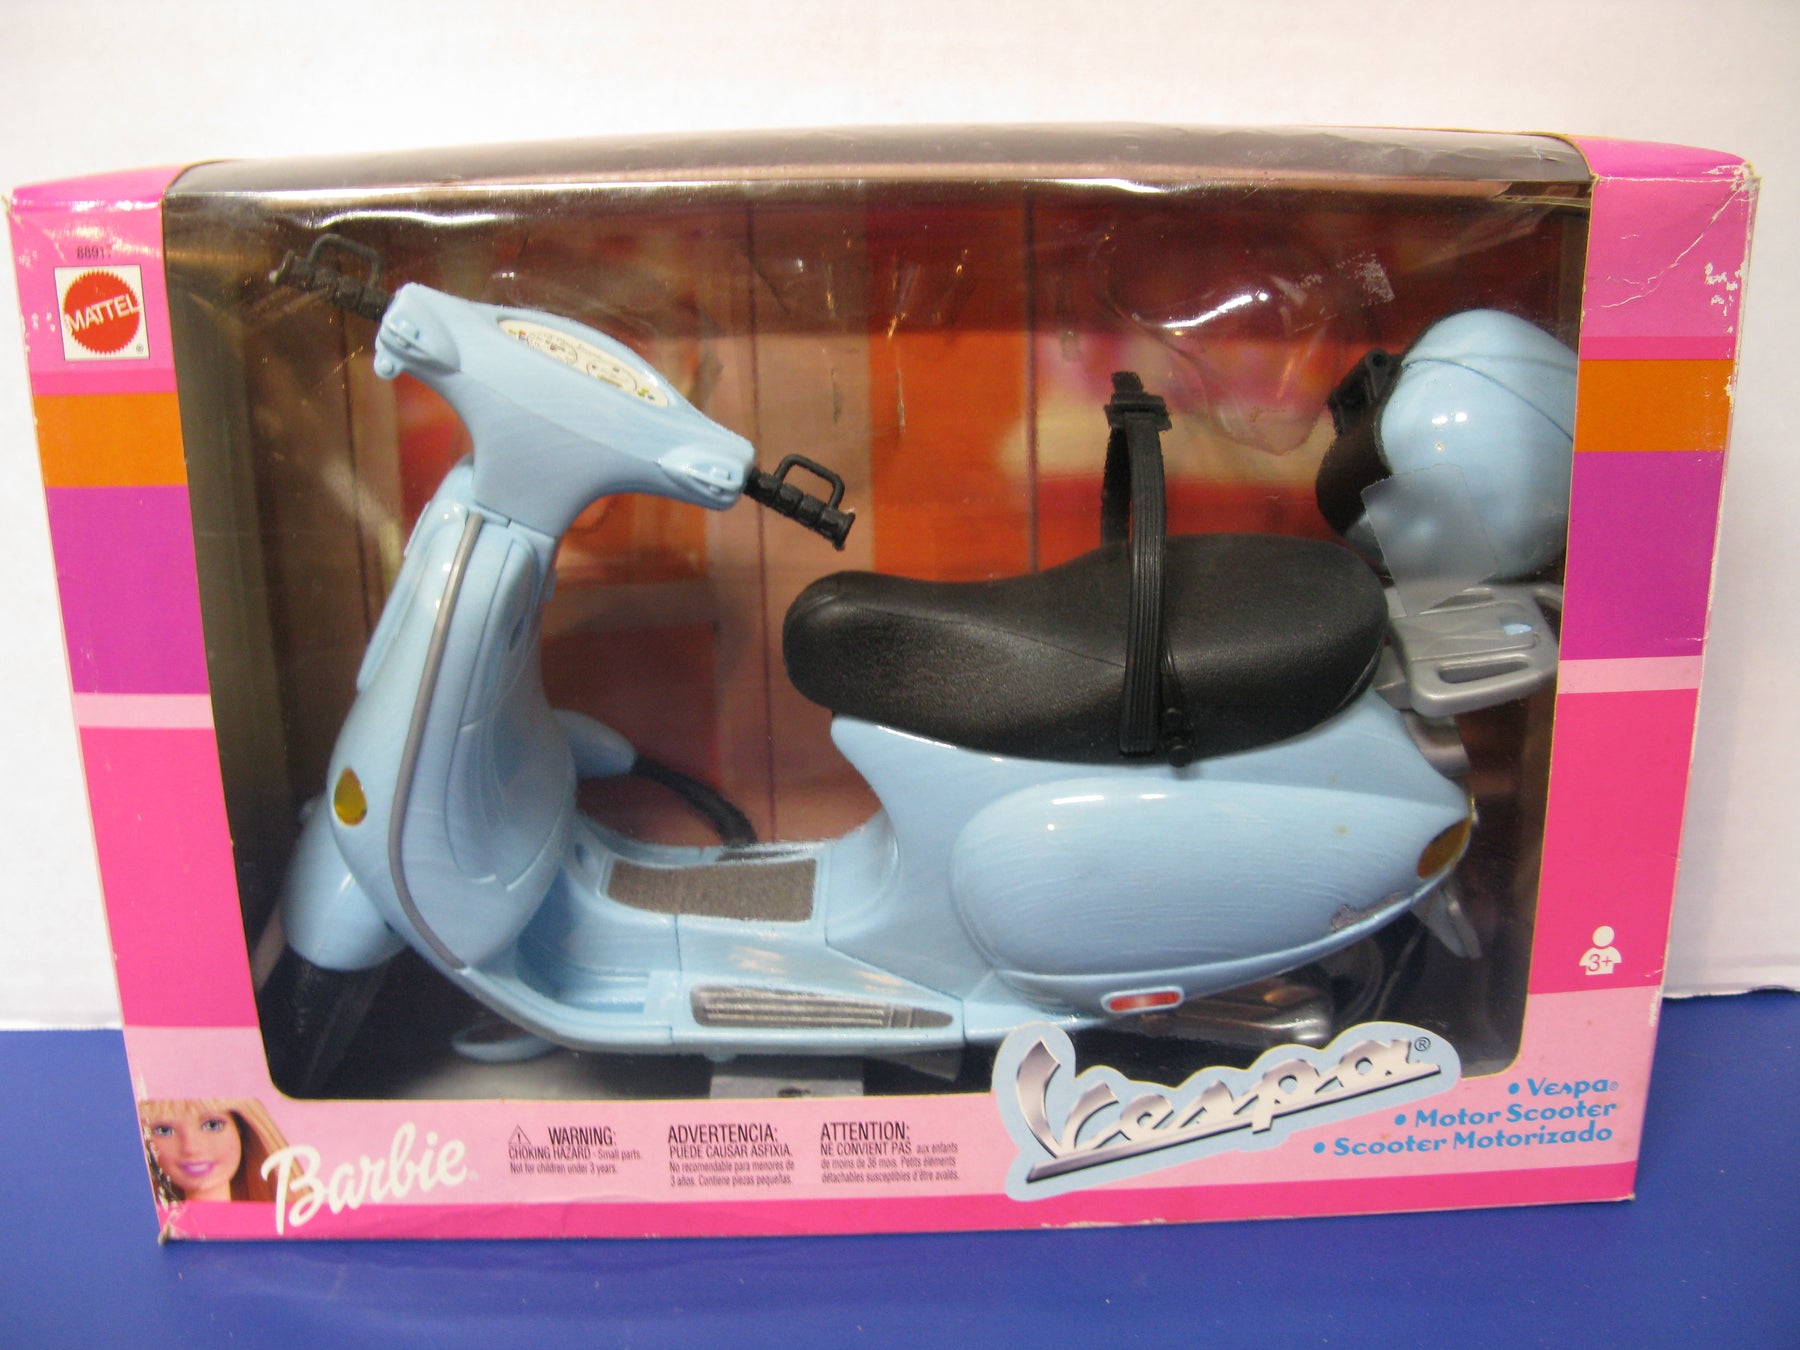 min Productiecentrum Logisch Barbie Vespa Motor Scooter — The Pop Culture Antique Museum